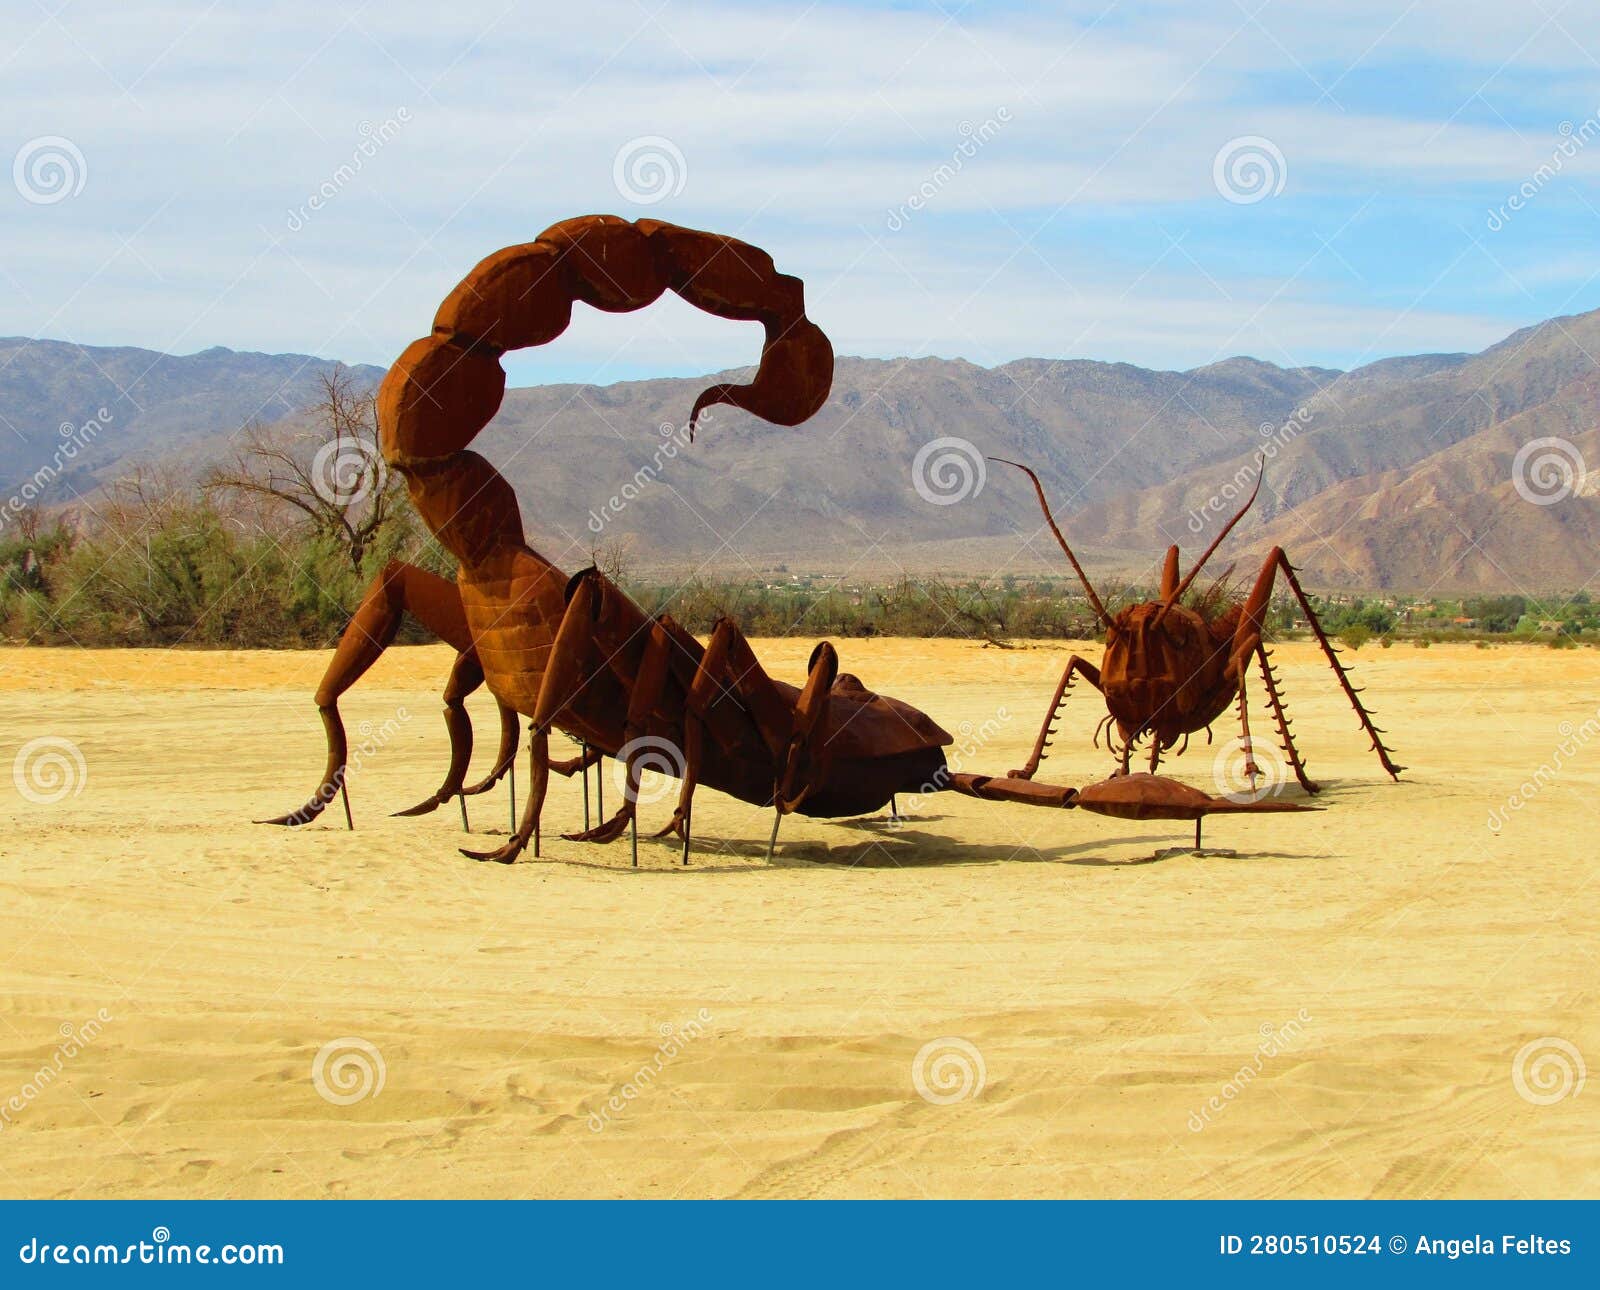 scorpion vs ant at galleta meadows in borrego springs california